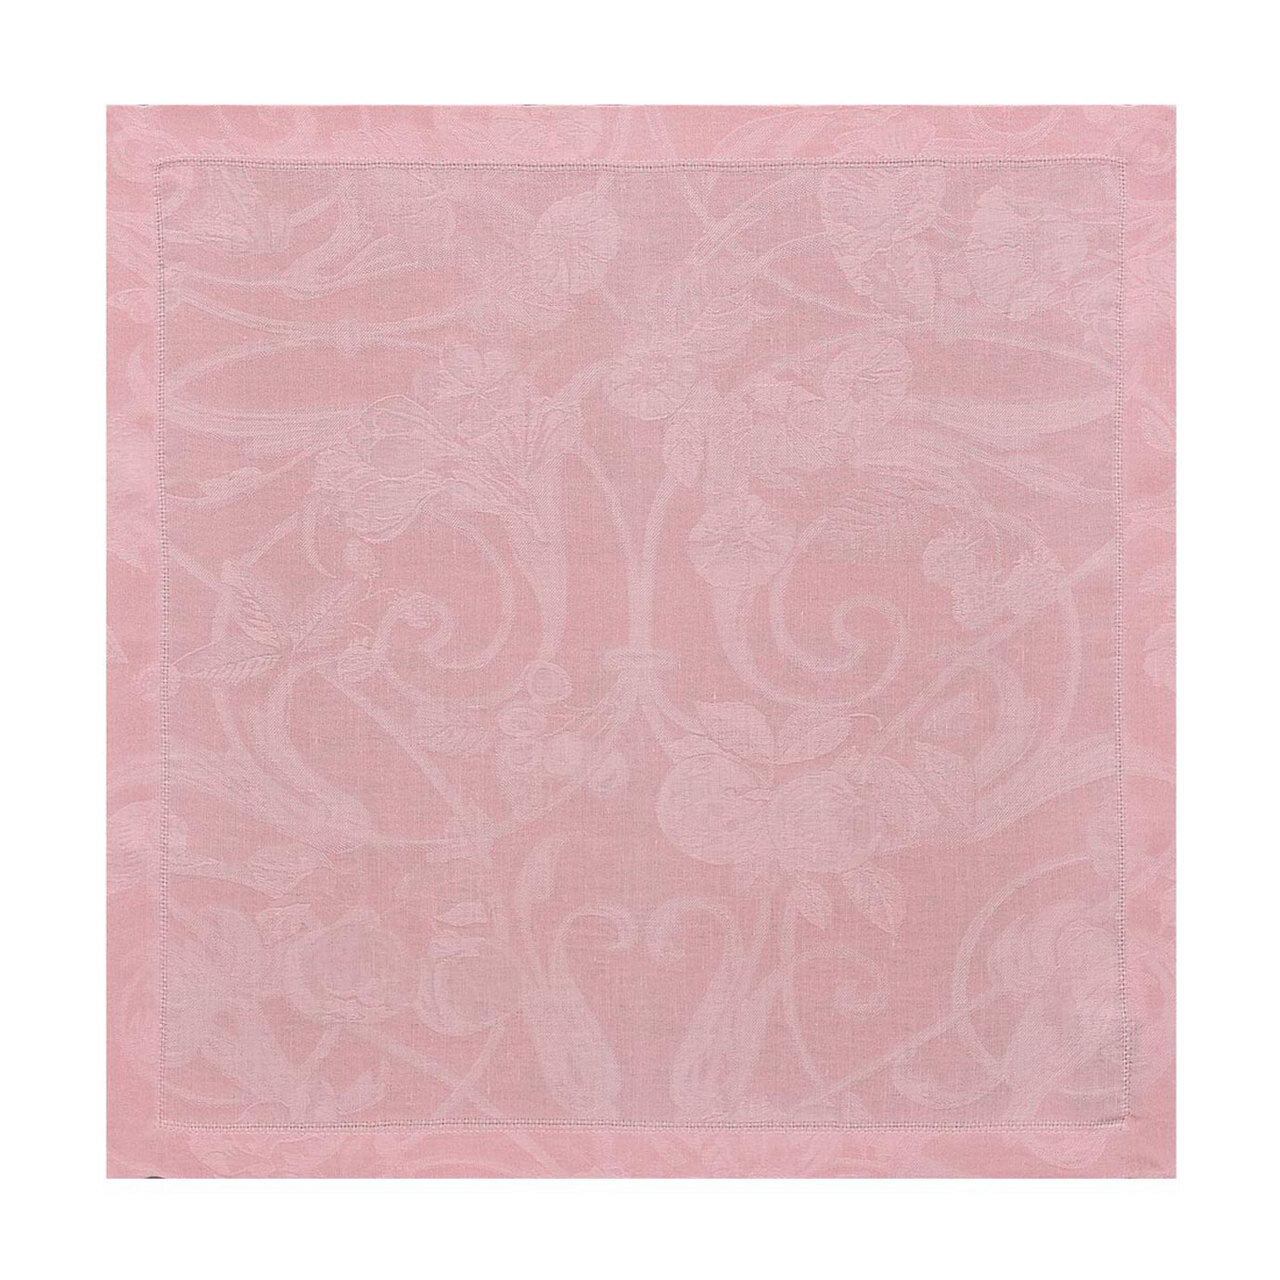 Le Jacquard Francais Tivoli Powder Pink Napkin 20 X 20 Inch 22507 Set of 4